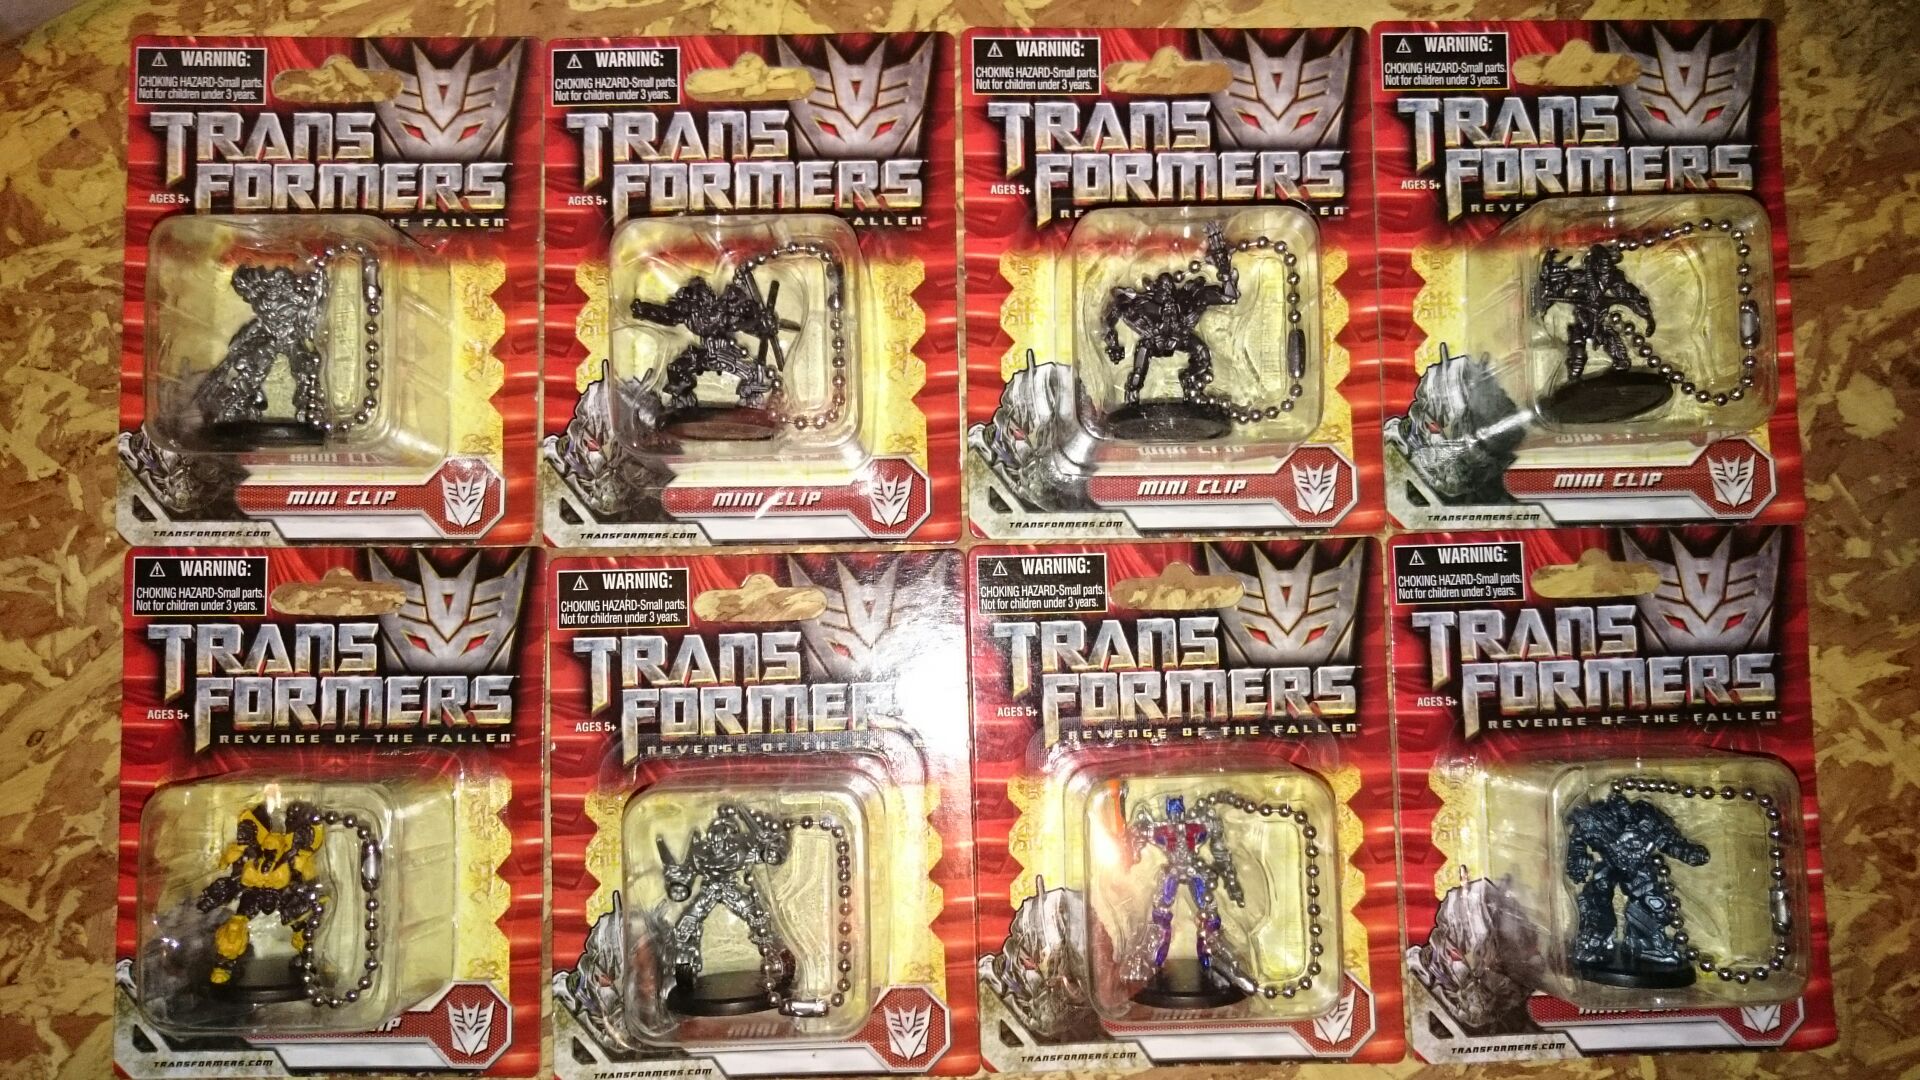 Transformers mini clip - Hasbro (transformers ROTF) action figure collectible [Barcode 014397016292] - Main Image 1